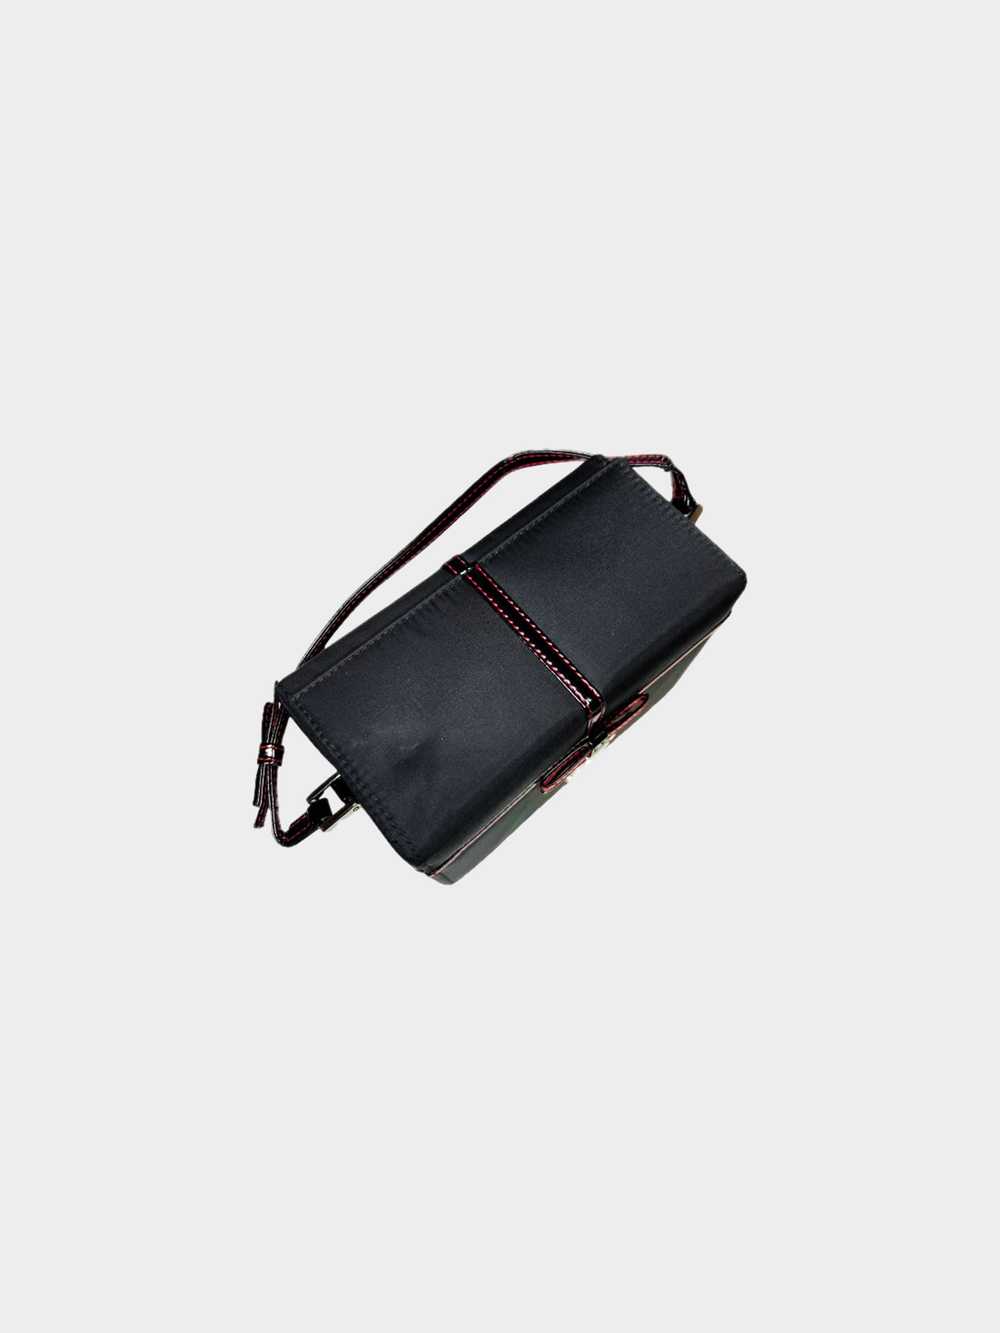 Christian Dior 2006 Black Ribbon Box Vanity Bag - image 4